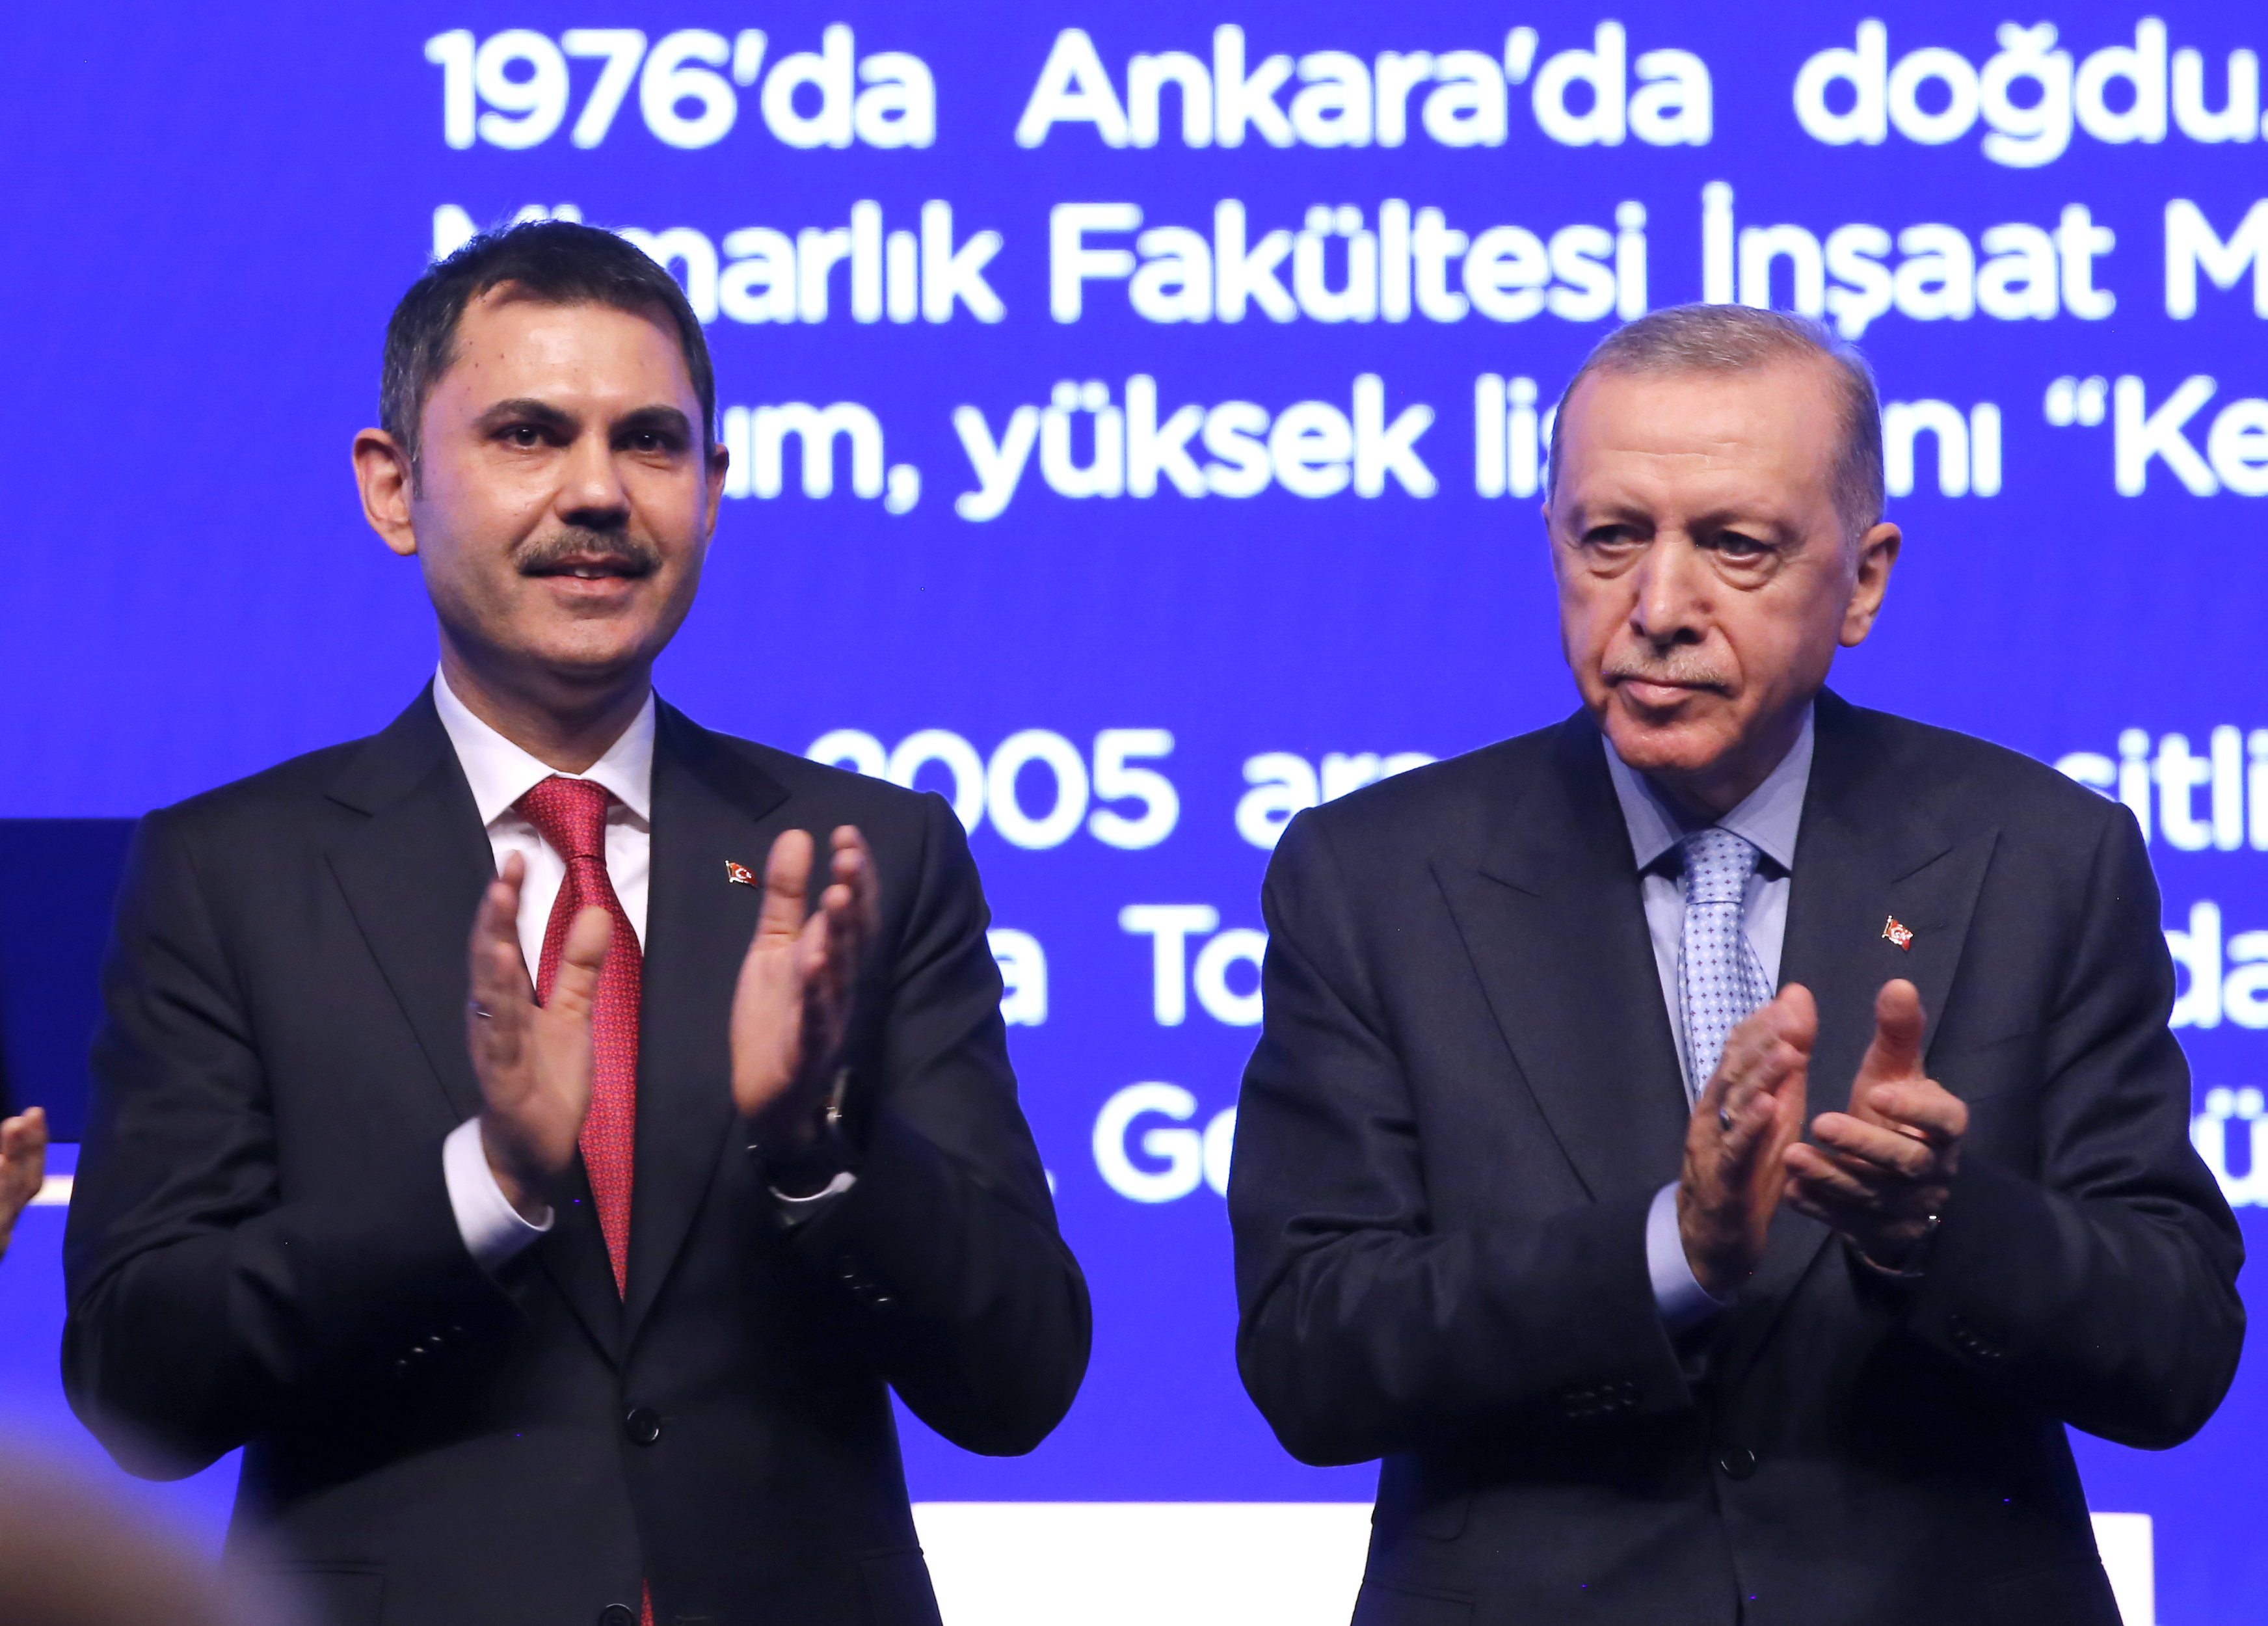 aa-20240107-33378400-33378399-turkish-president-recep-tayyip-erdogan-announced-murat-kurum-as-mayoral-candidate-for-istanbul.jpg